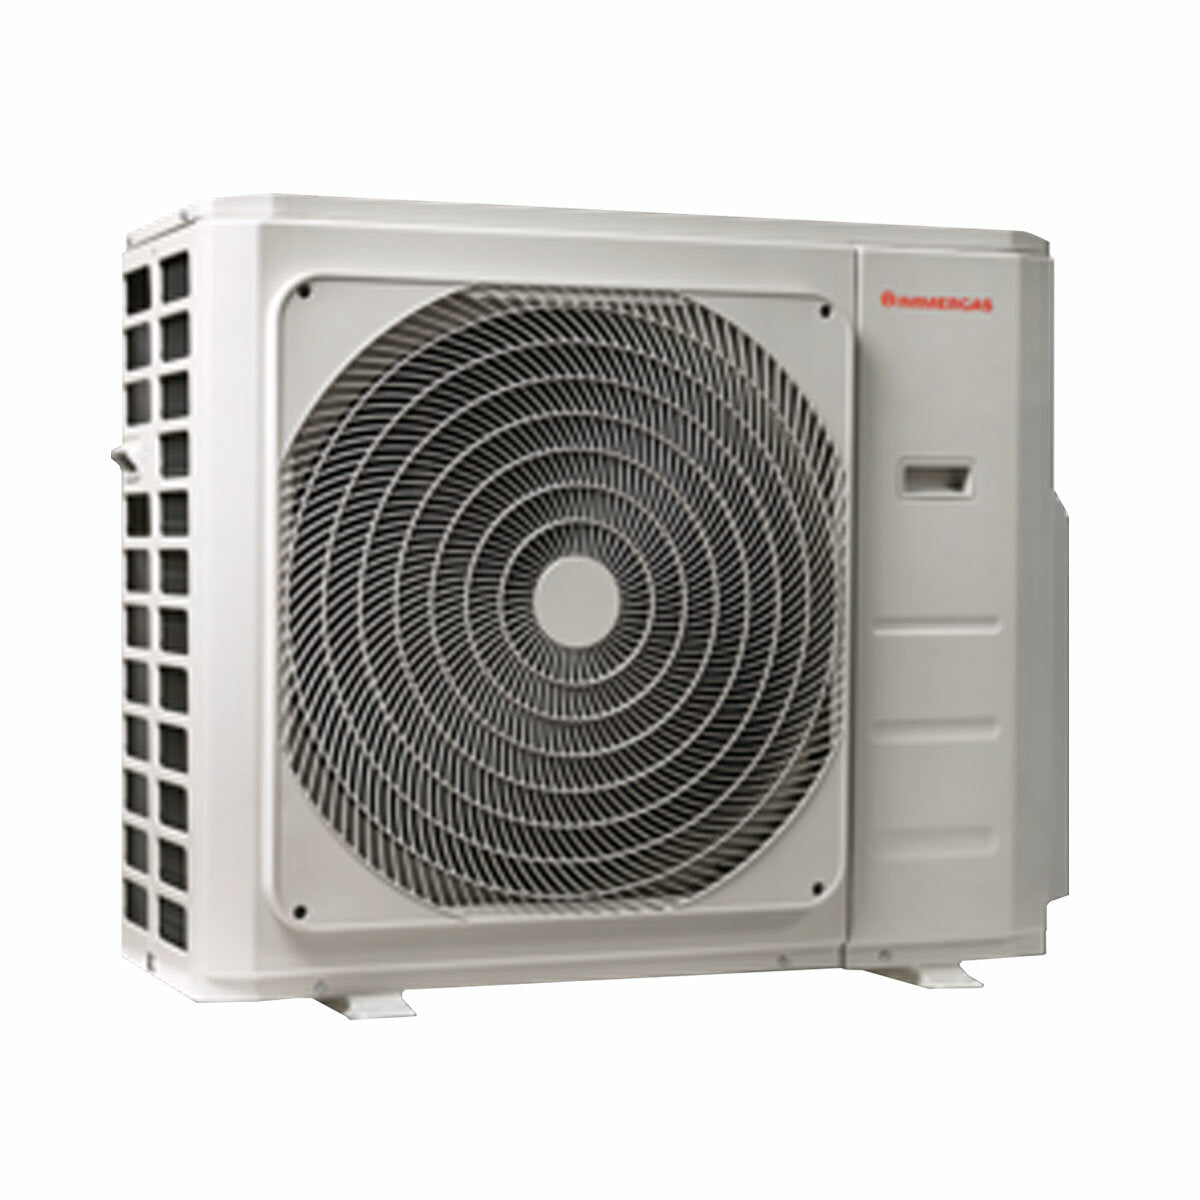 Immergas THOR trial split air conditioner 12000+12000+12000 BTU inverter A++ external unit 7.9 kW